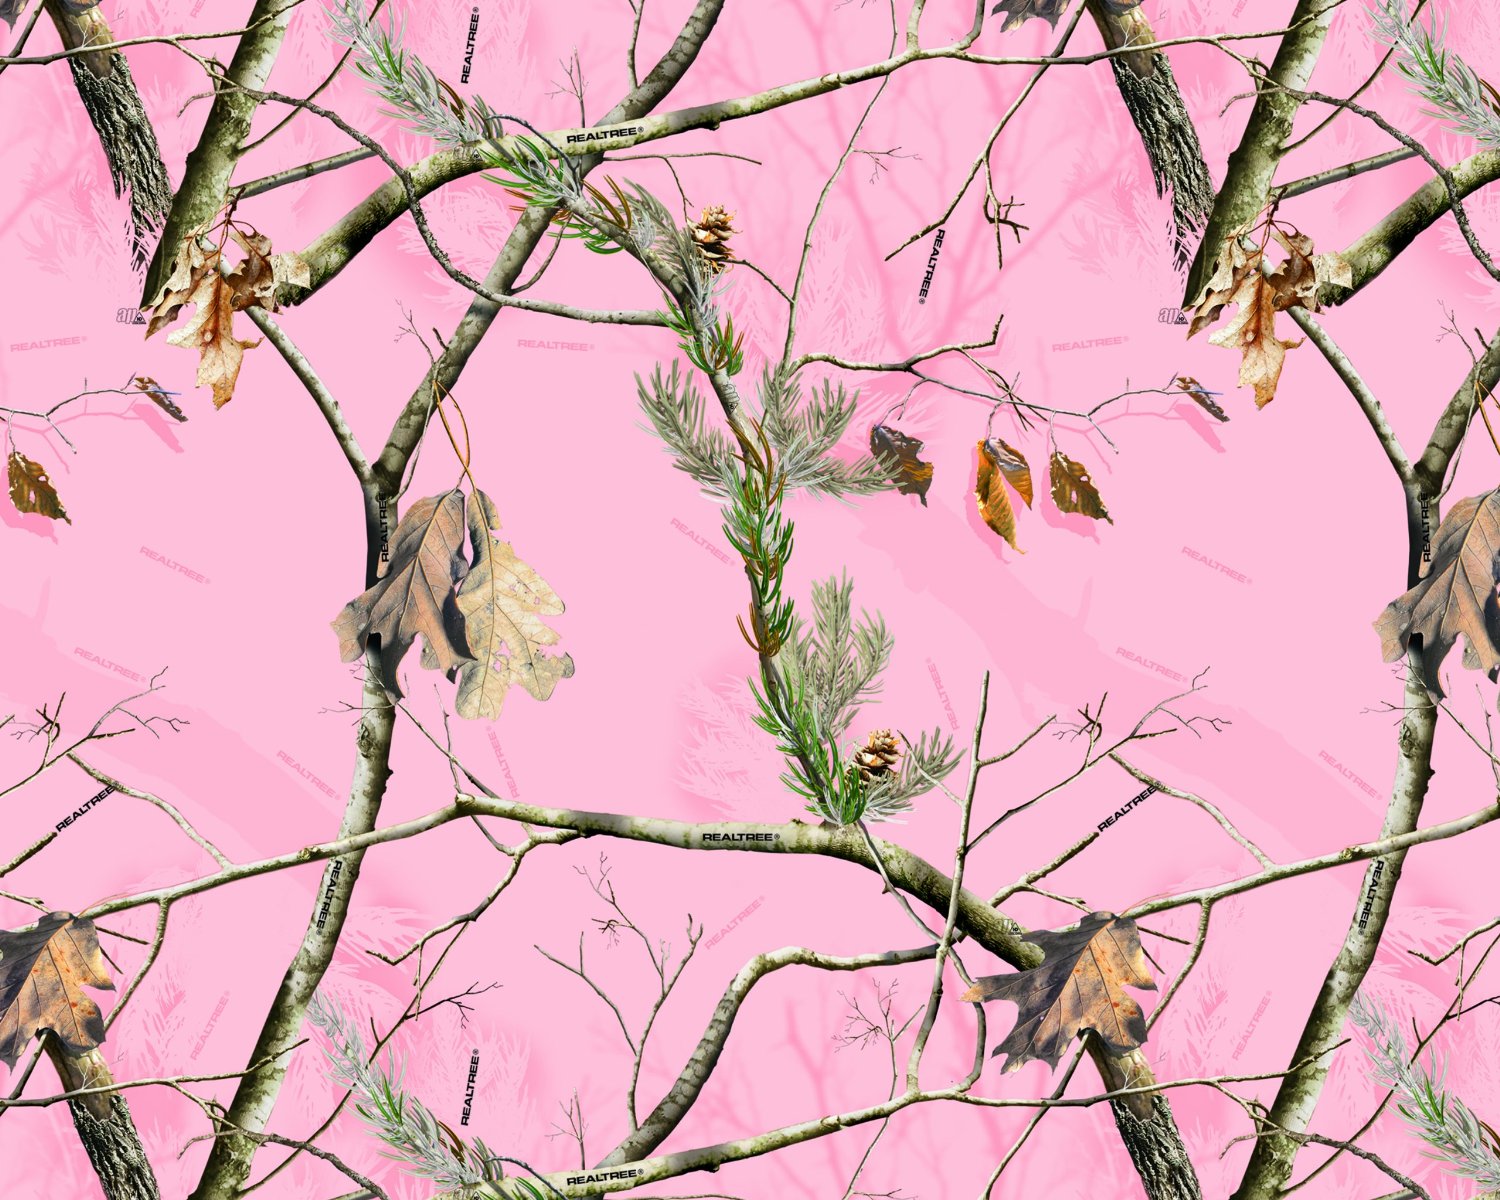 Realtree Pink Camo Wallpaper For Iphone 91lzjkz86jl sl1500 jpg